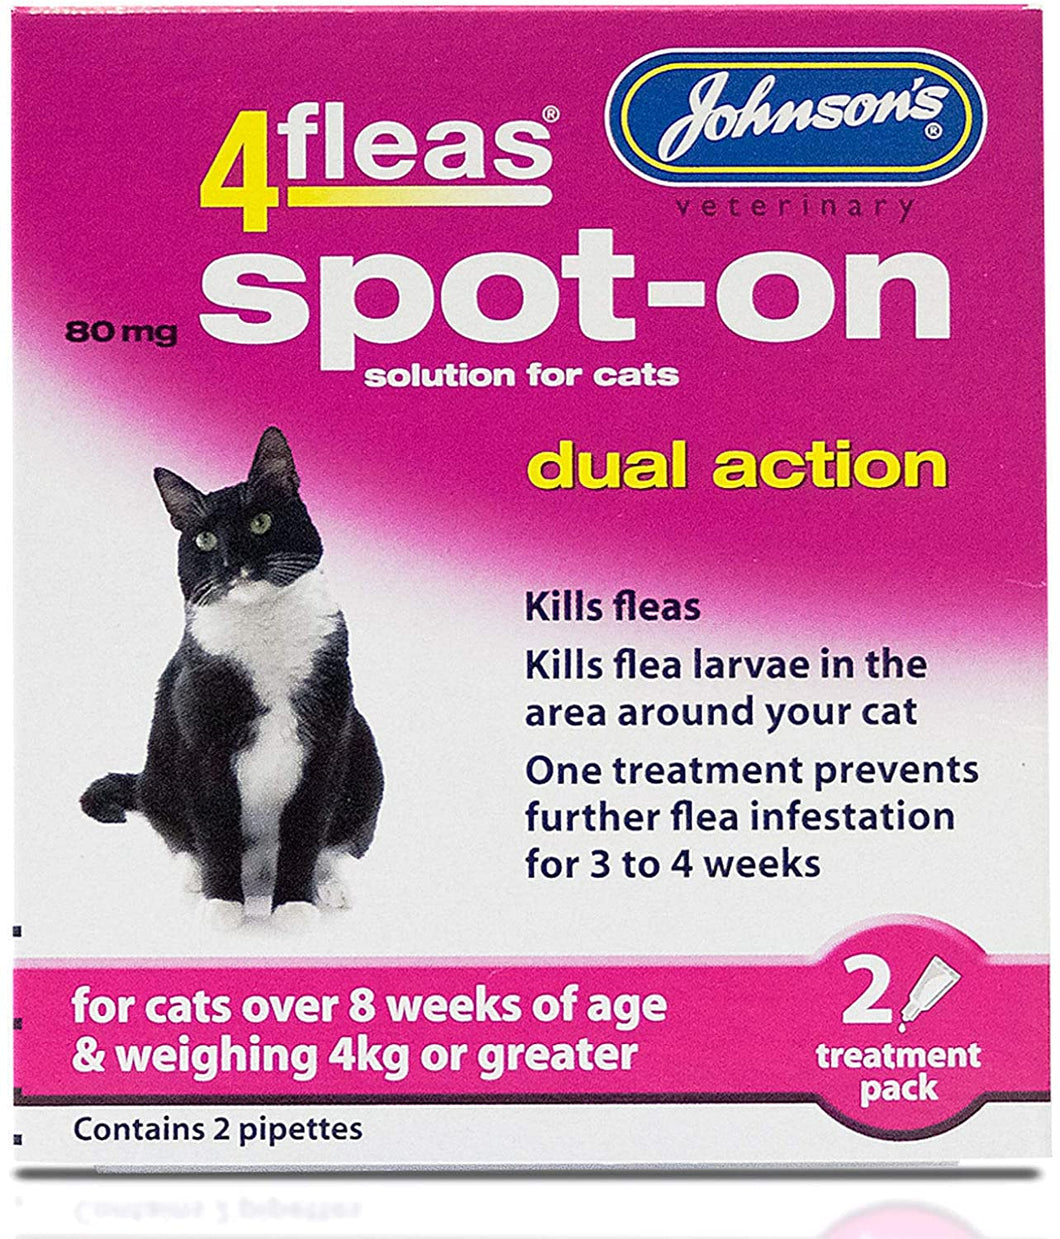 Johnson's 4fleas Spot On Cat, 2 treatments